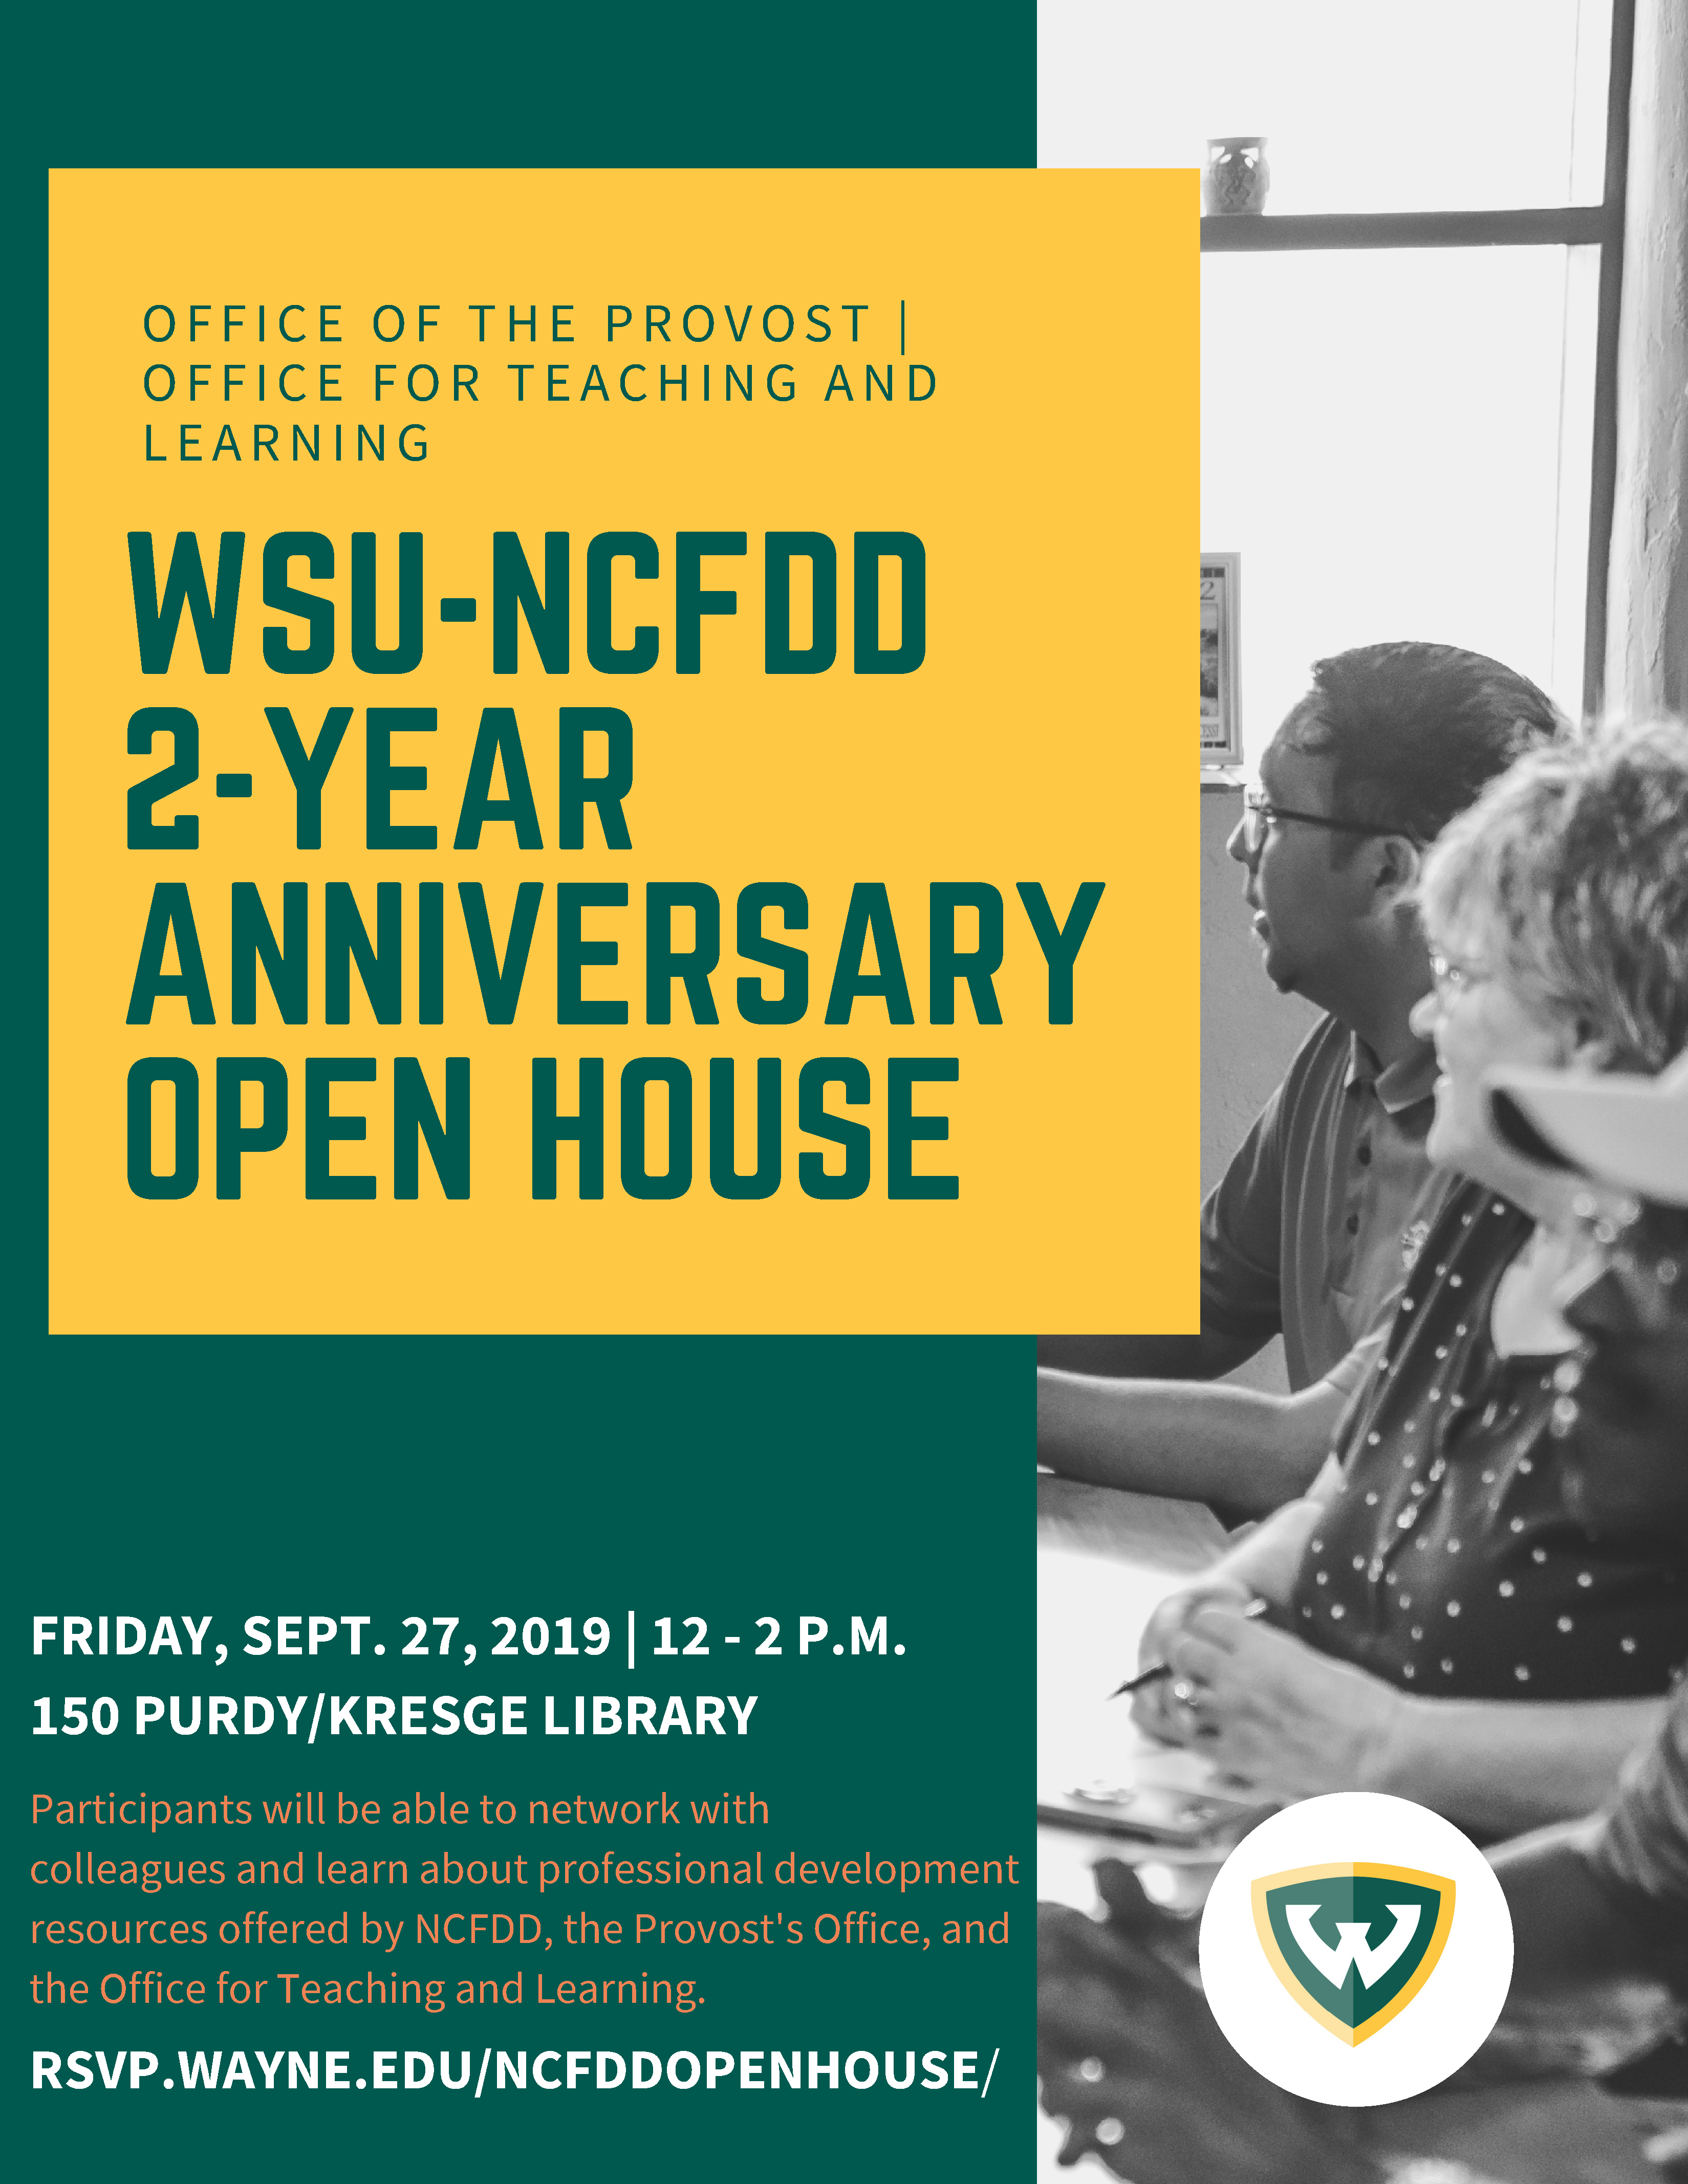 WSU NCFDD 2-Year Anniversary Open House Flyer